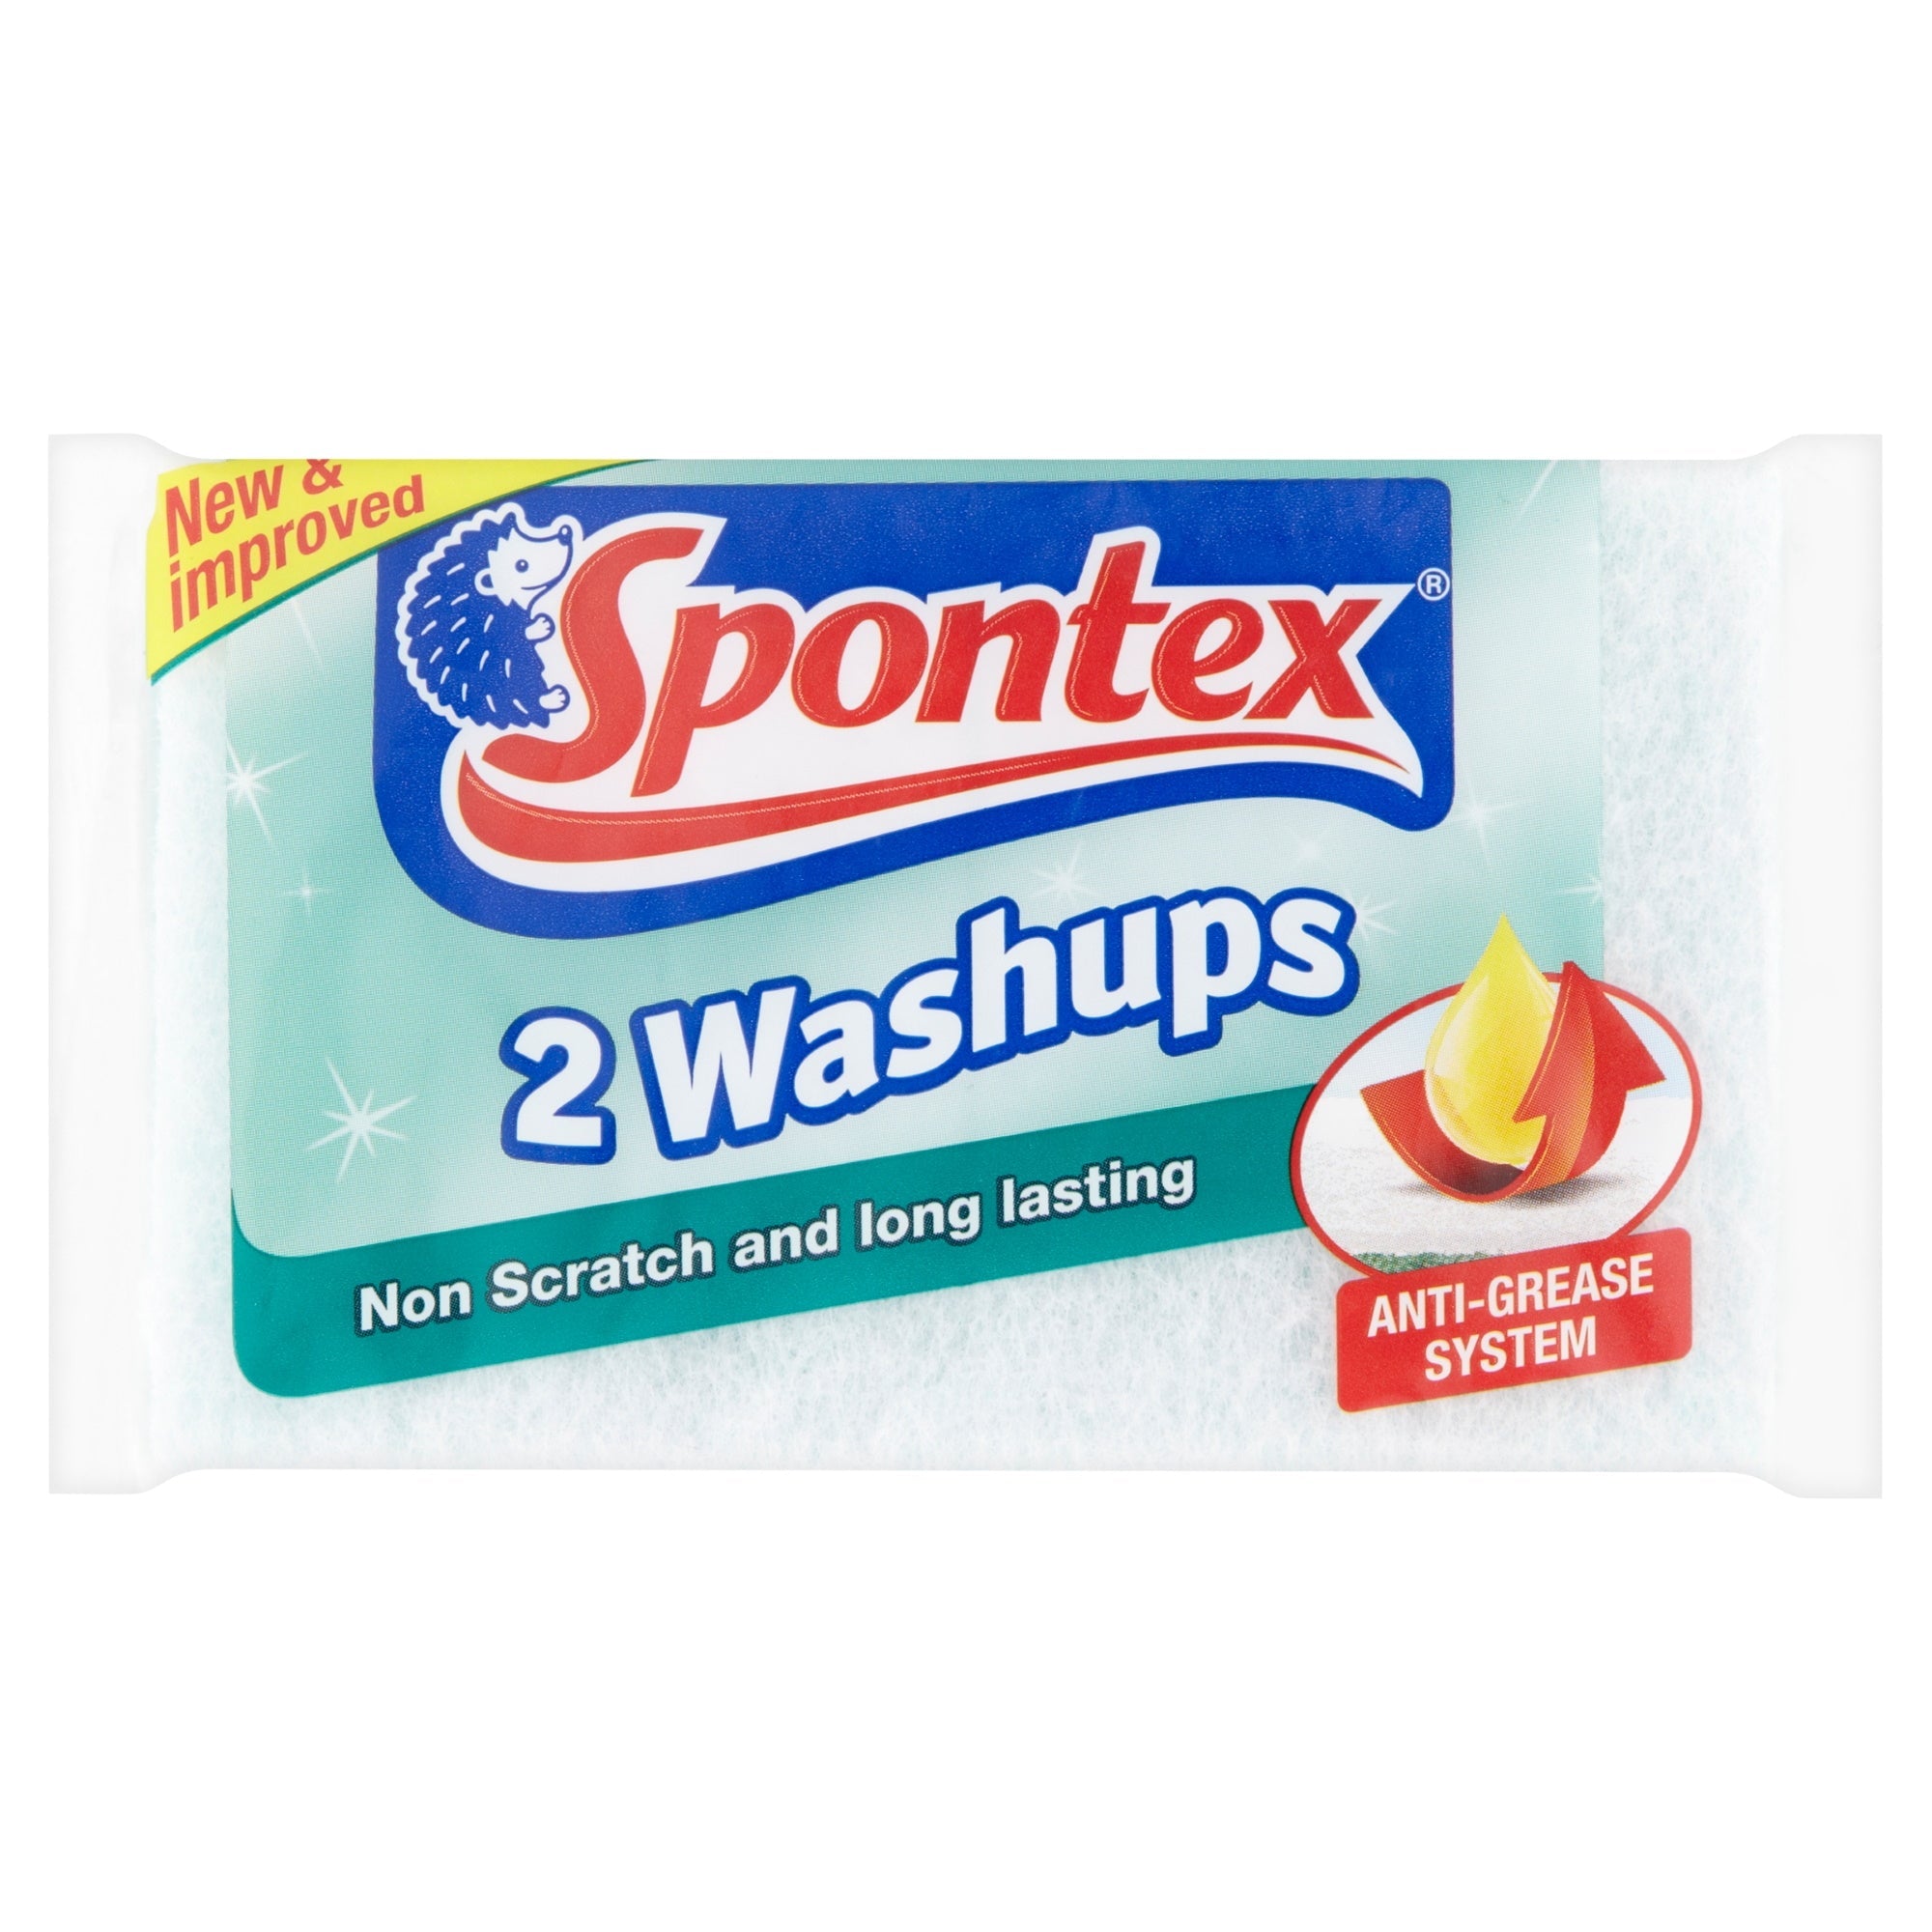 Spontex Washups Non Scratch Sponge Scourers - Pack of 2 - Premium Scourers / Sponges from Spontex - Just $0.9! Shop now at W Hurst & Son (IW) Ltd